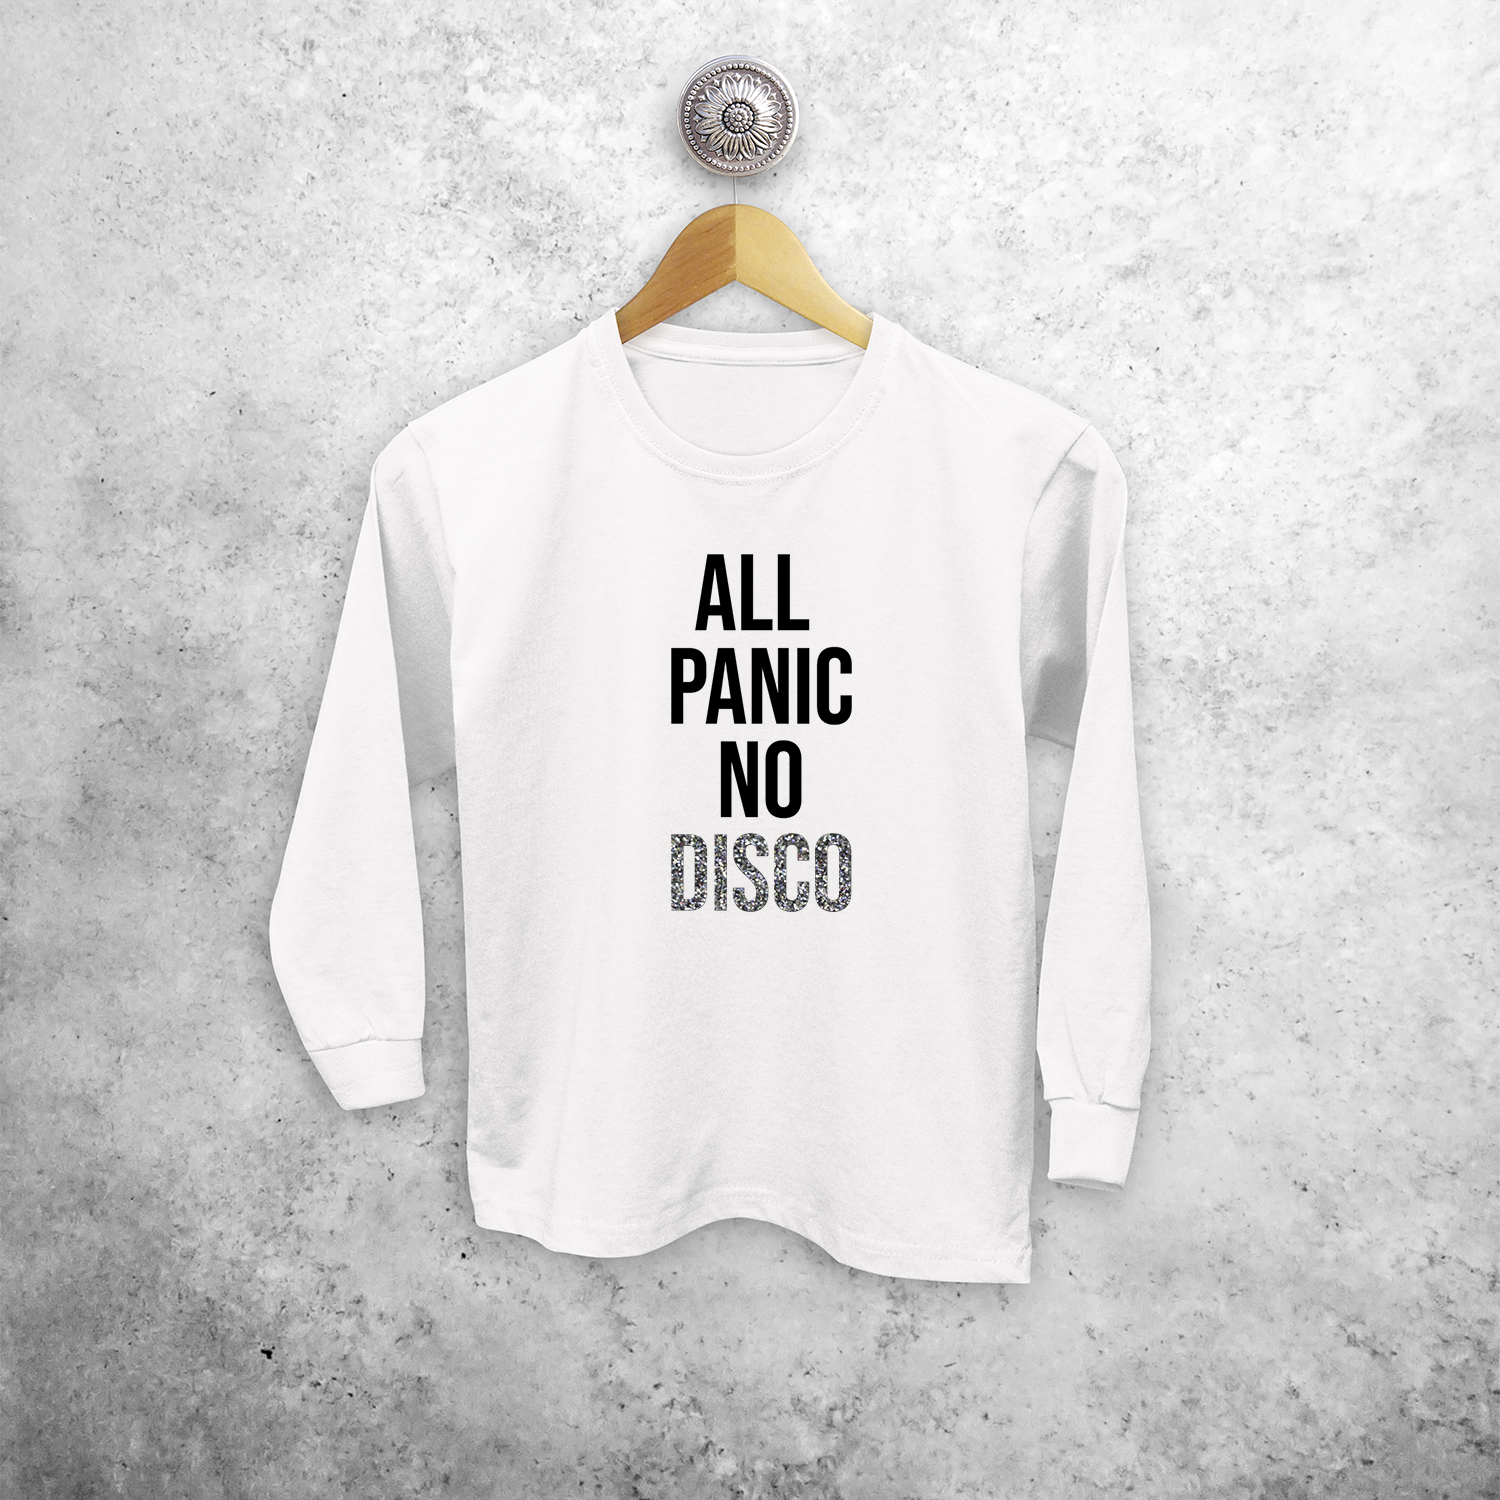 'All panic no disco' kids longsleeve shirt